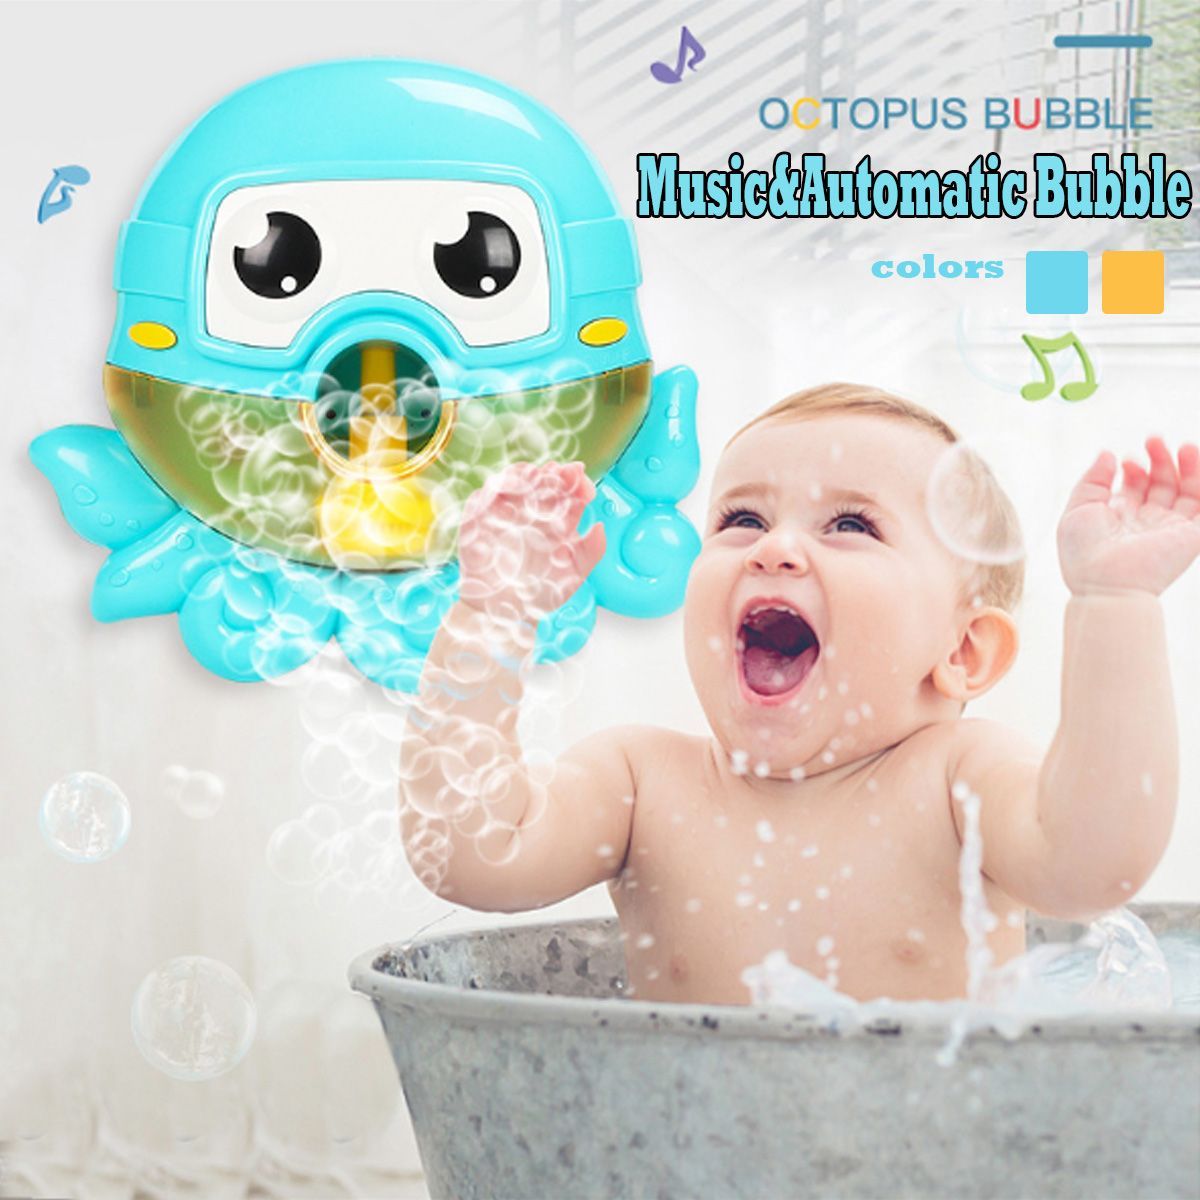 Bath-Water-Toys-Baby-Kids-Sucker-Octopus-Carton-MUSIC-Automatic-Bubble-Play-Fun-1645221